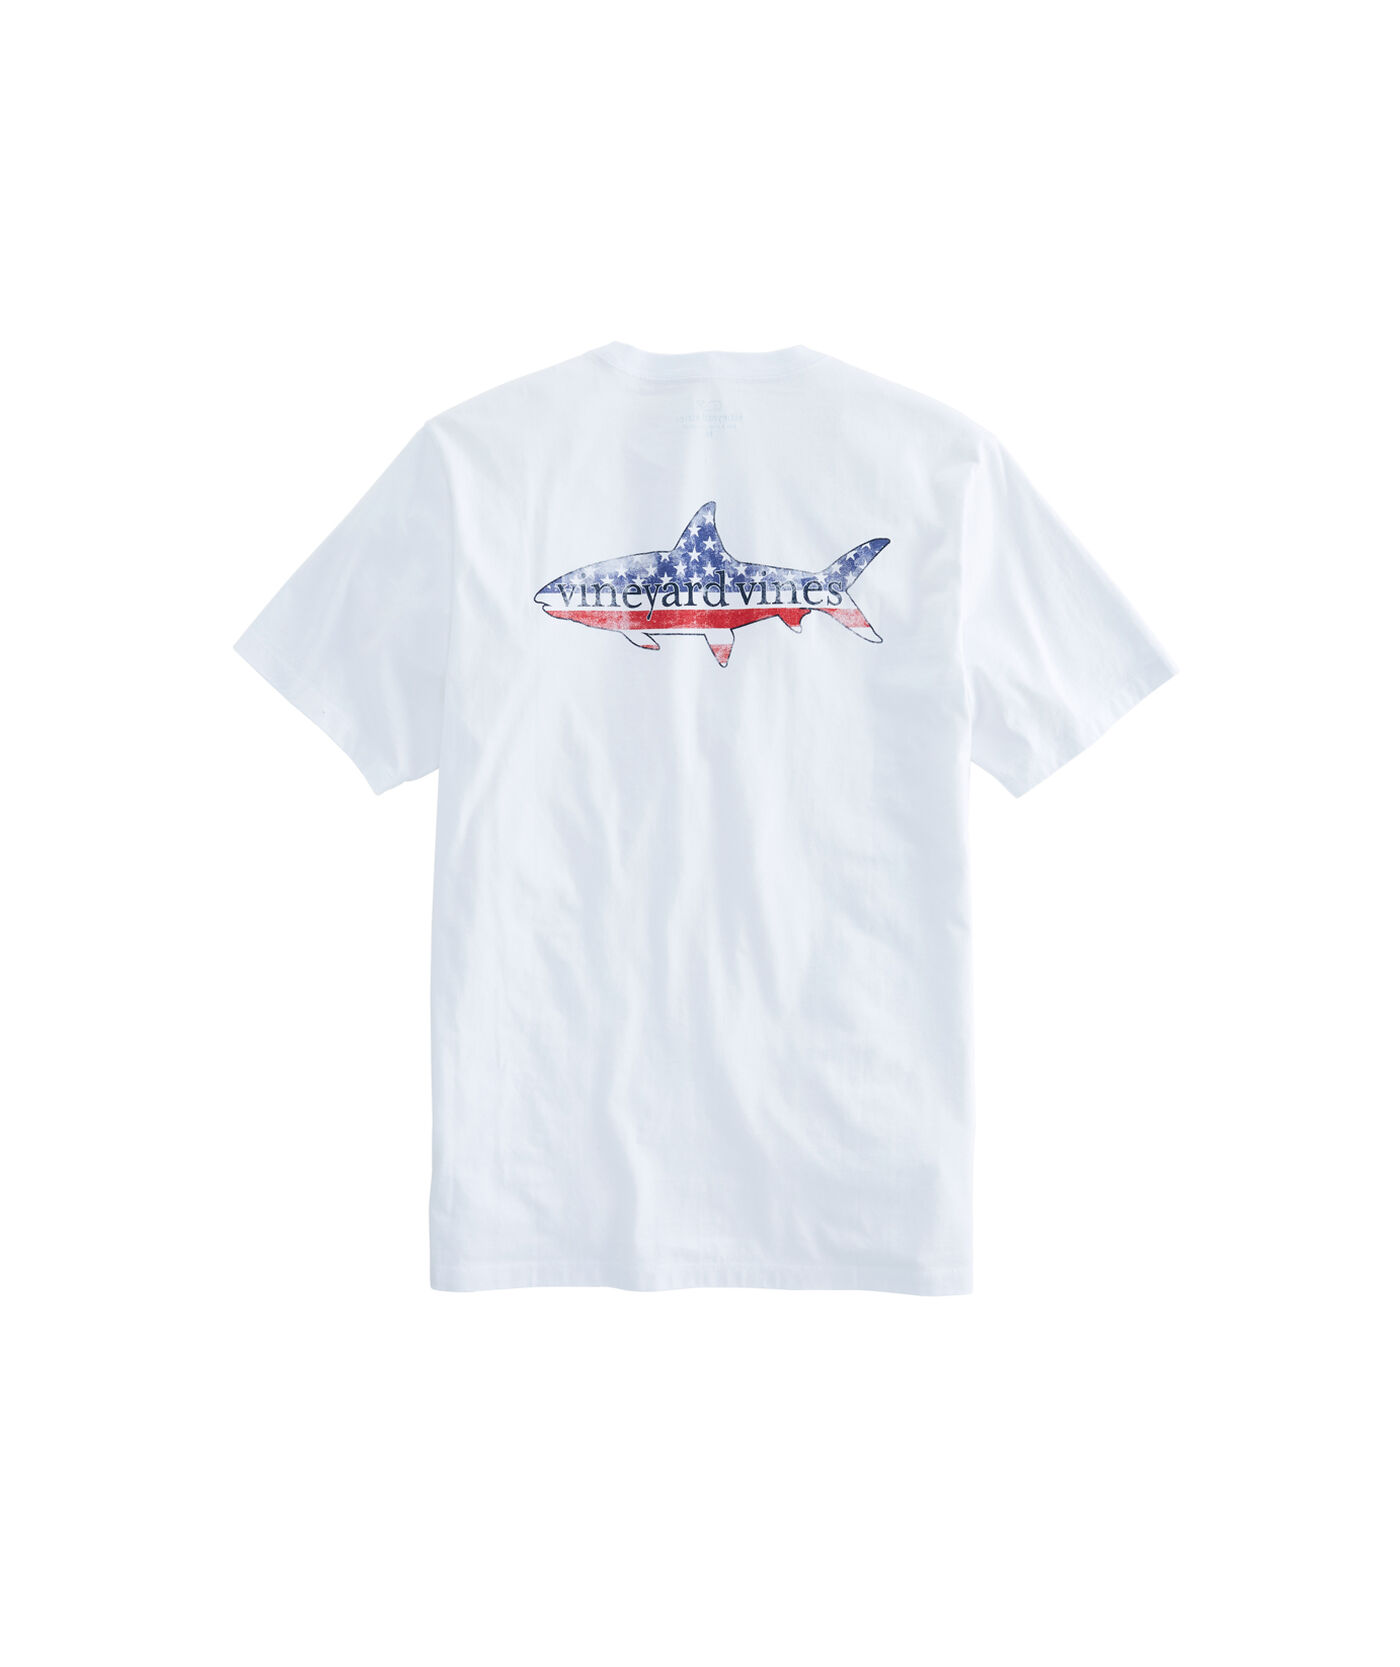 Shop American Bonefish T-Shirt at vineyard vines